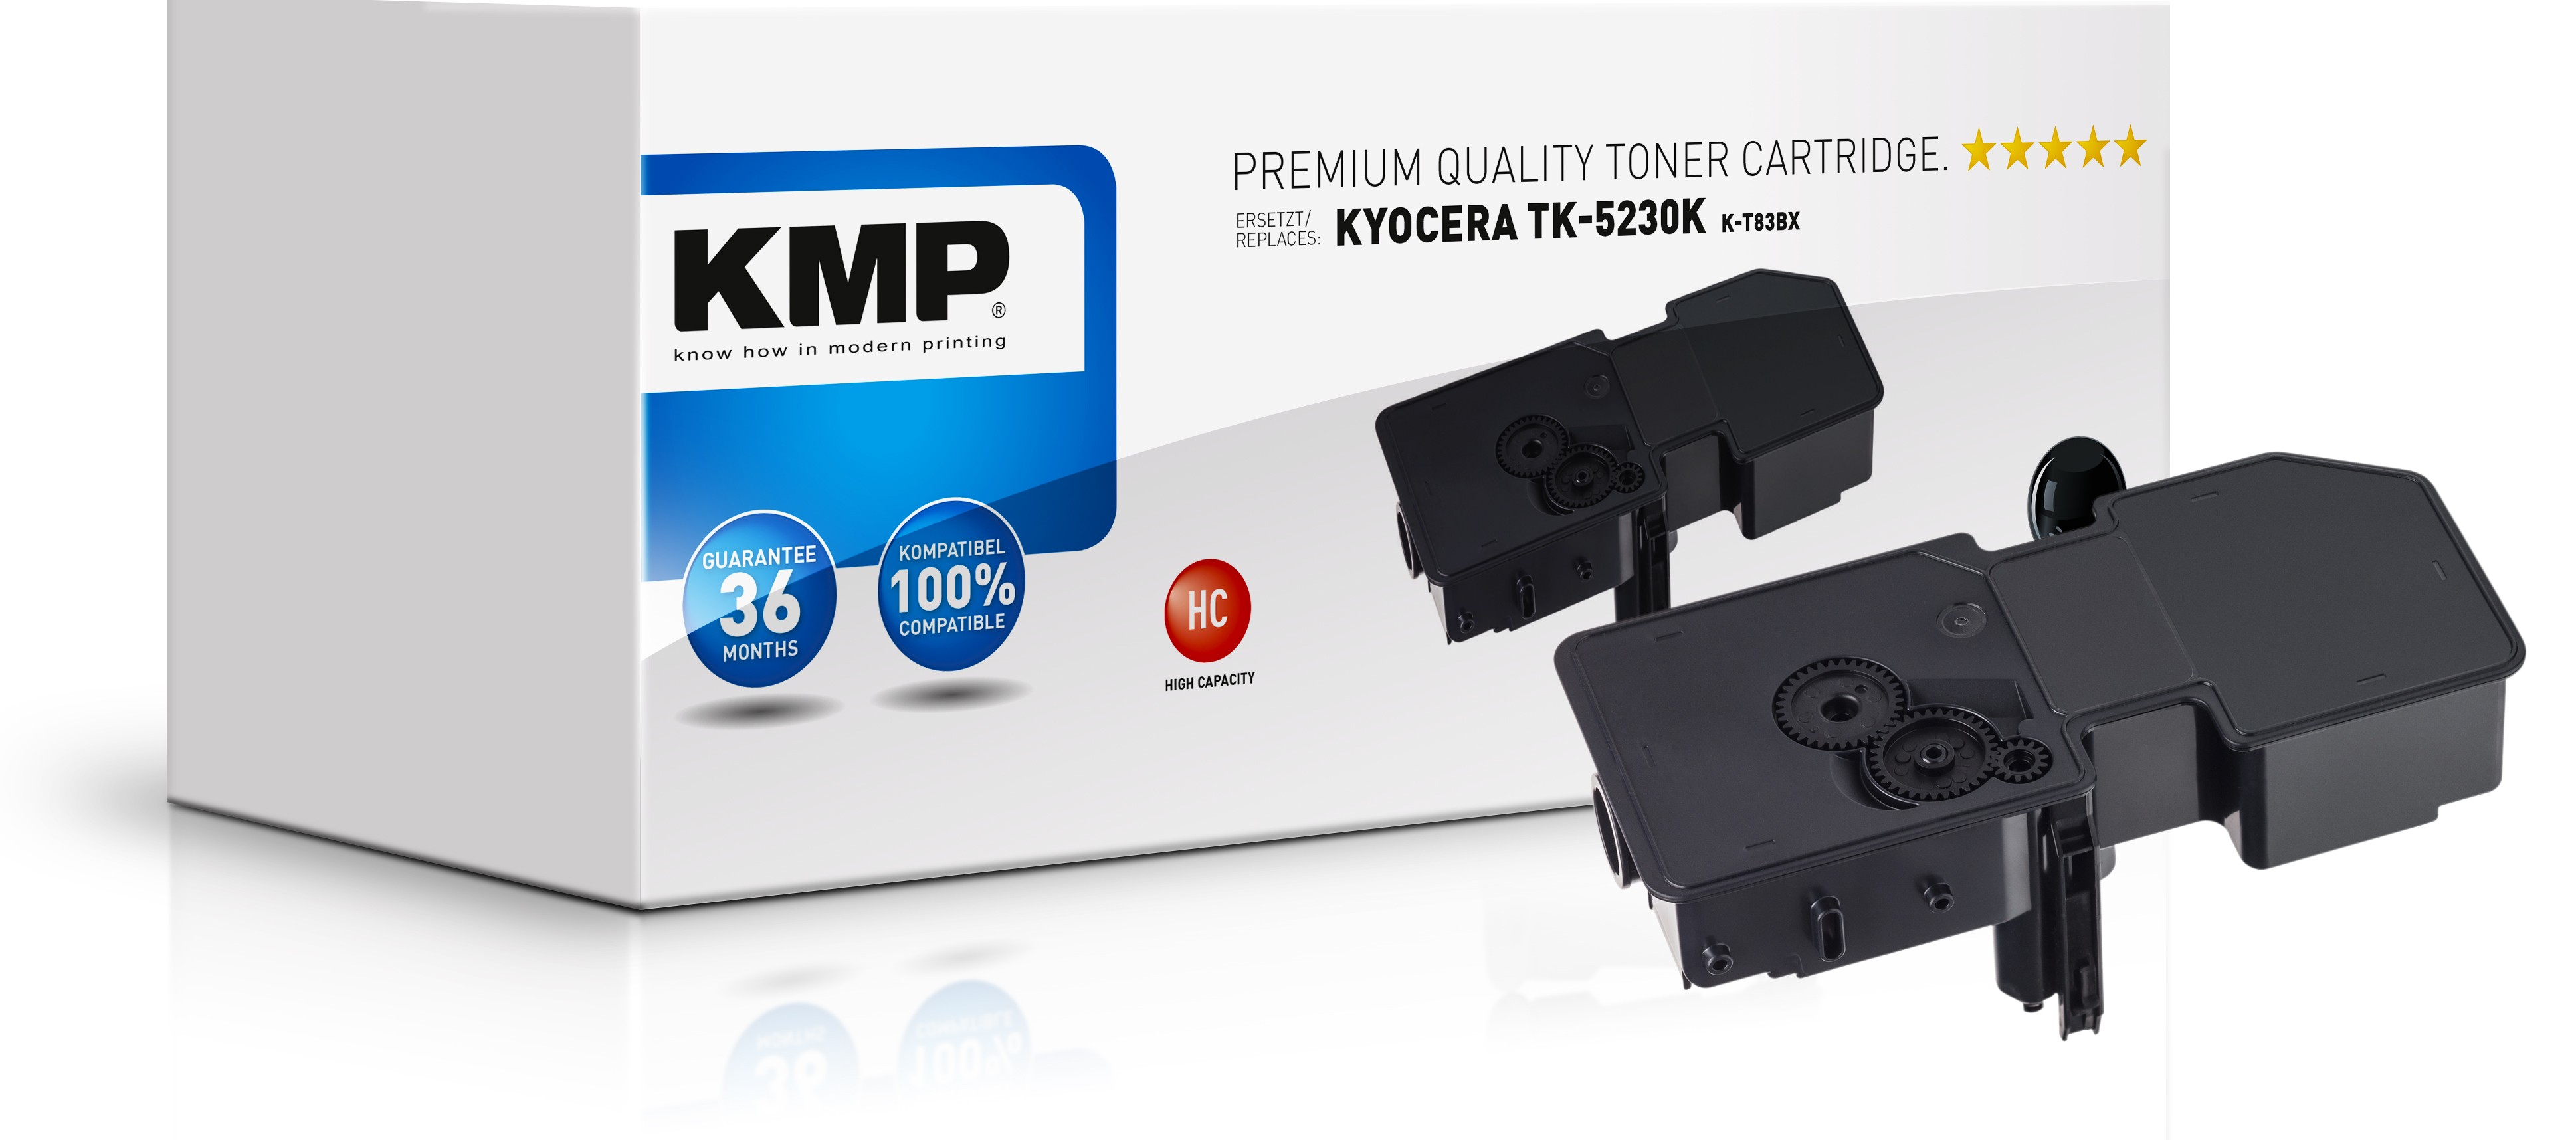 Toner Kyocera TK5230K comp black K-T83BX